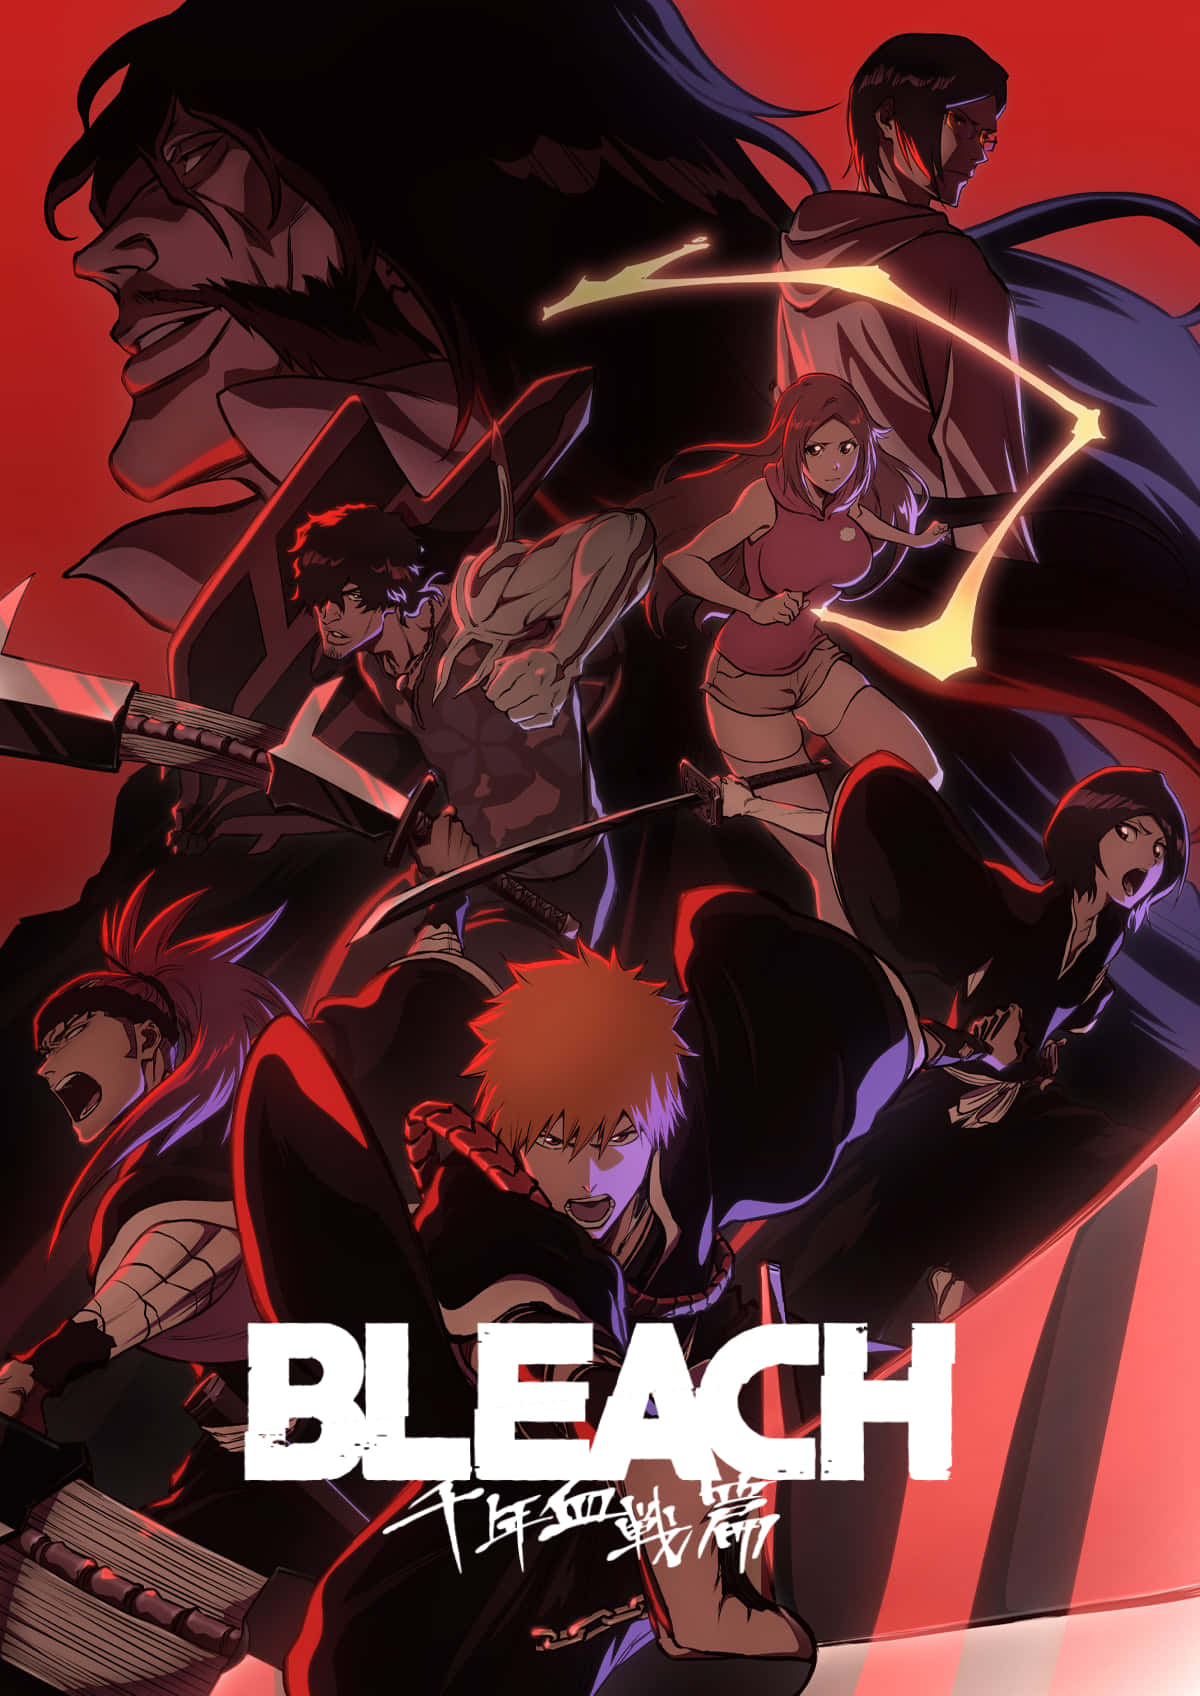 Ichigo and his allies face their toughest enemies yet in the Bleach Thousand-year Blood War Arc. Wallpaper